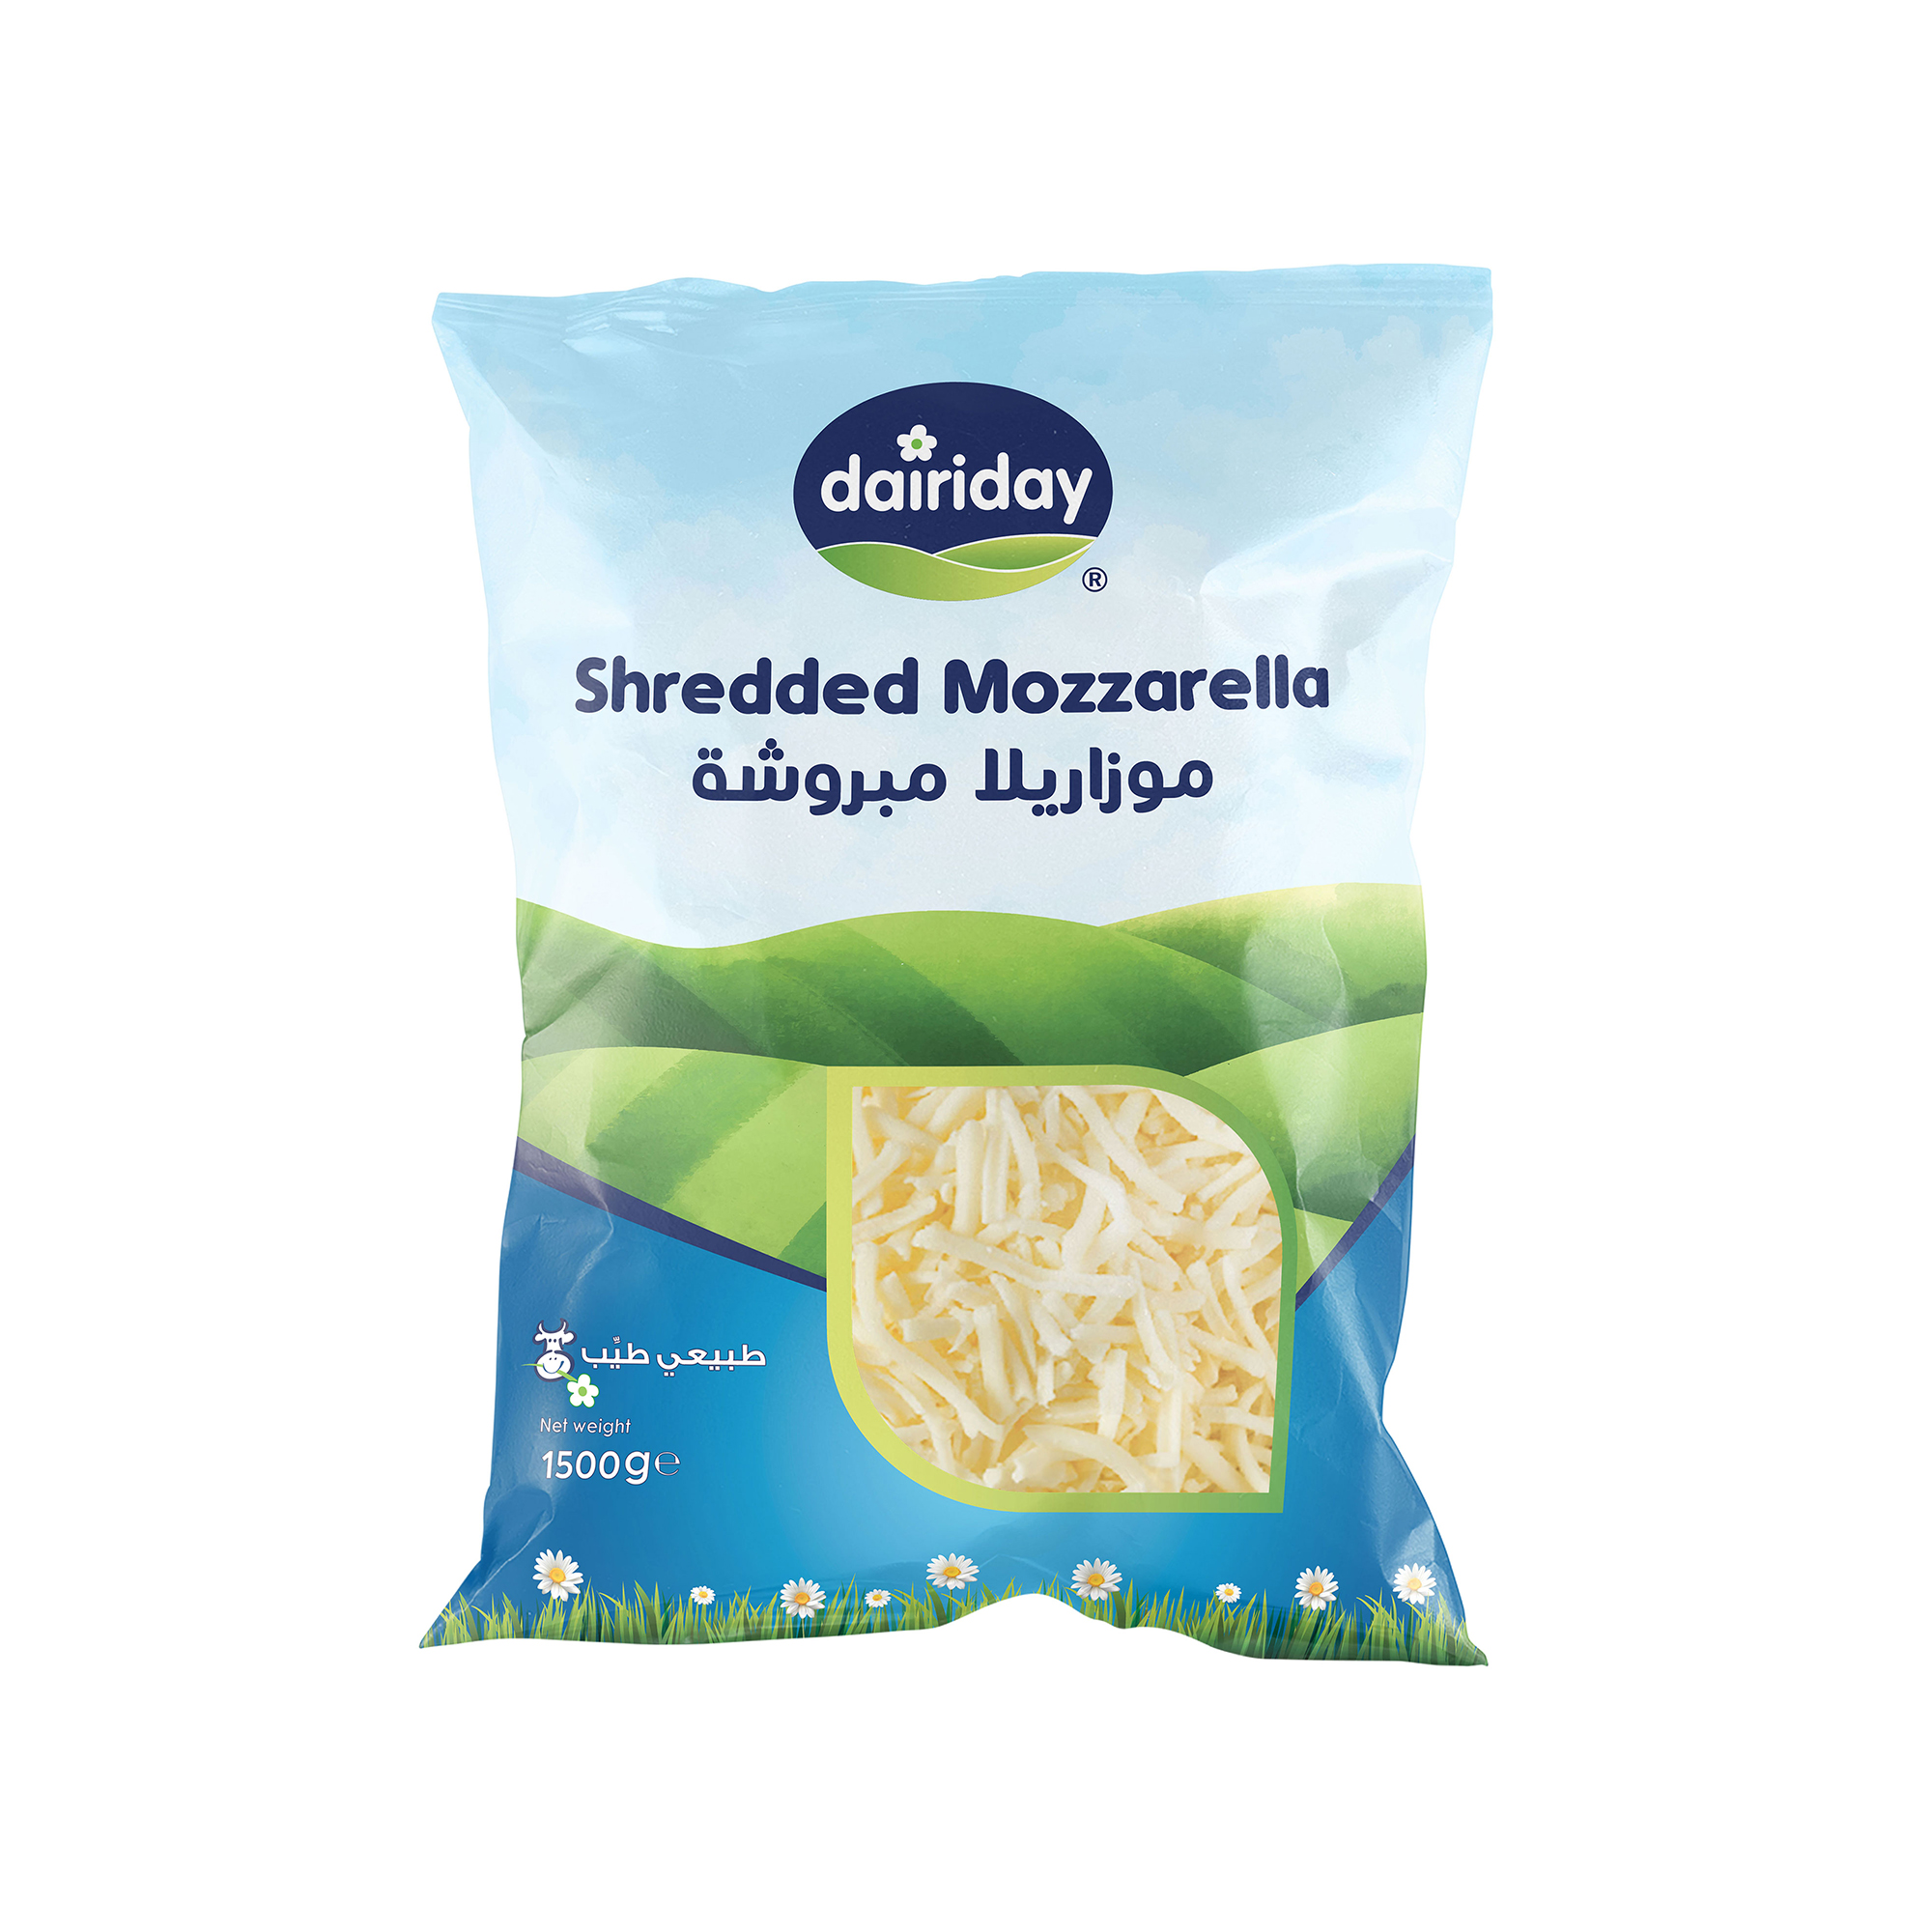 Dairiday-Shredded-Mozarella-1500g-cheese